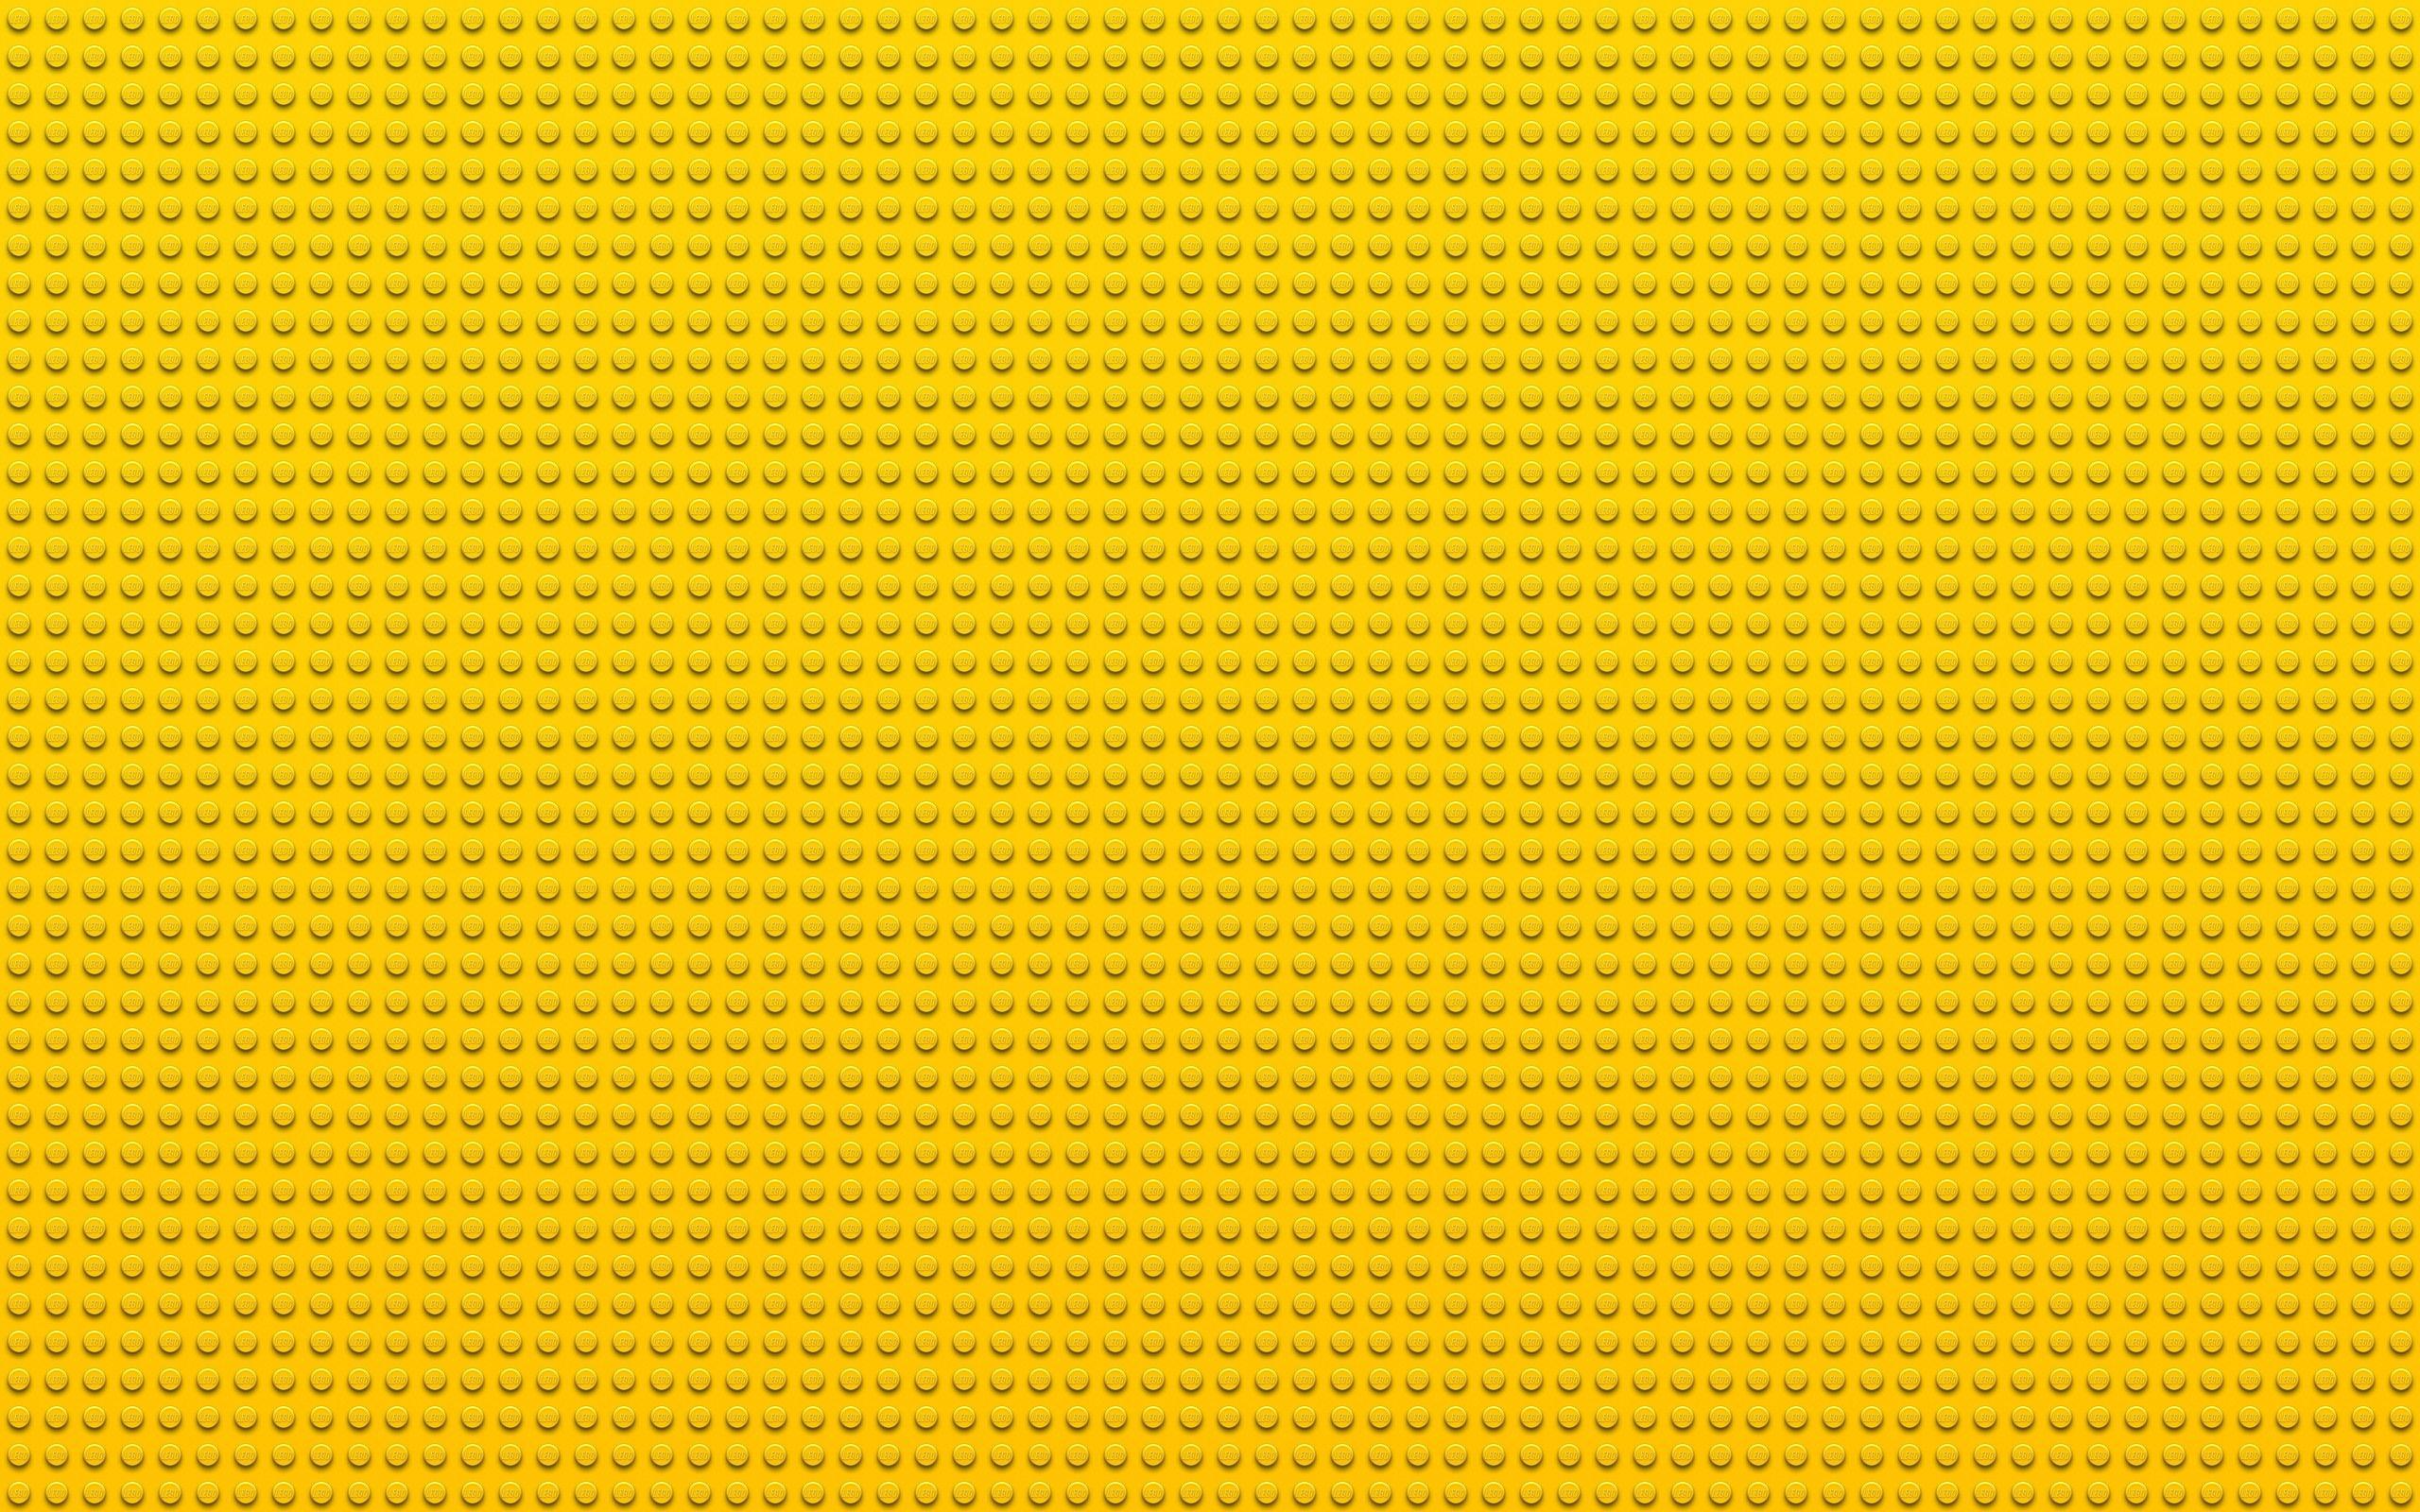 lego yellow textures dots 2560x1600 wallpaper. SMILE.it's